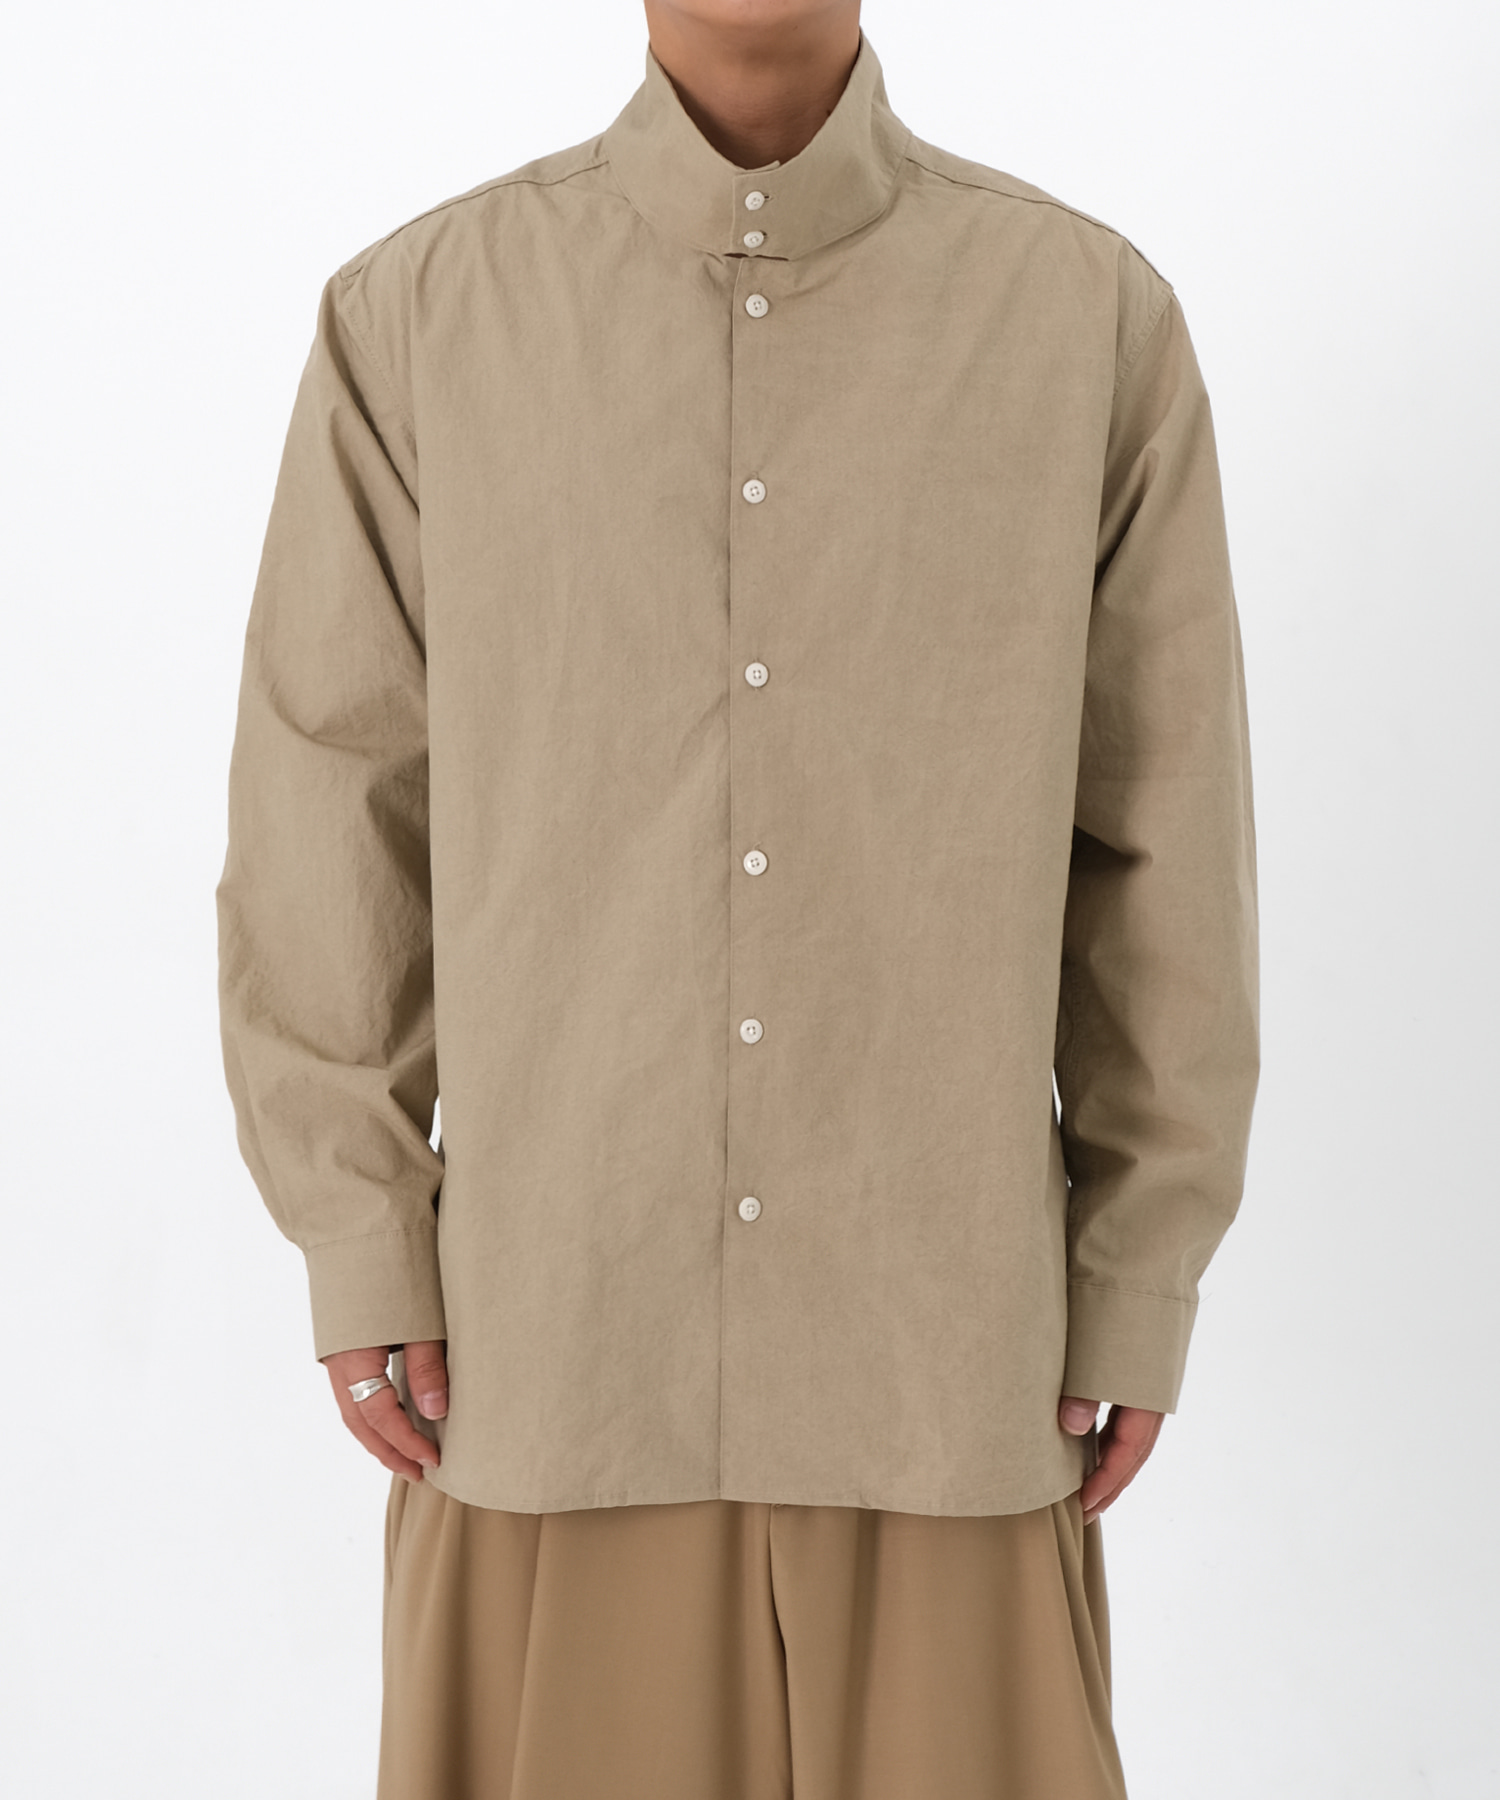 high neck shirts jacket (beige)